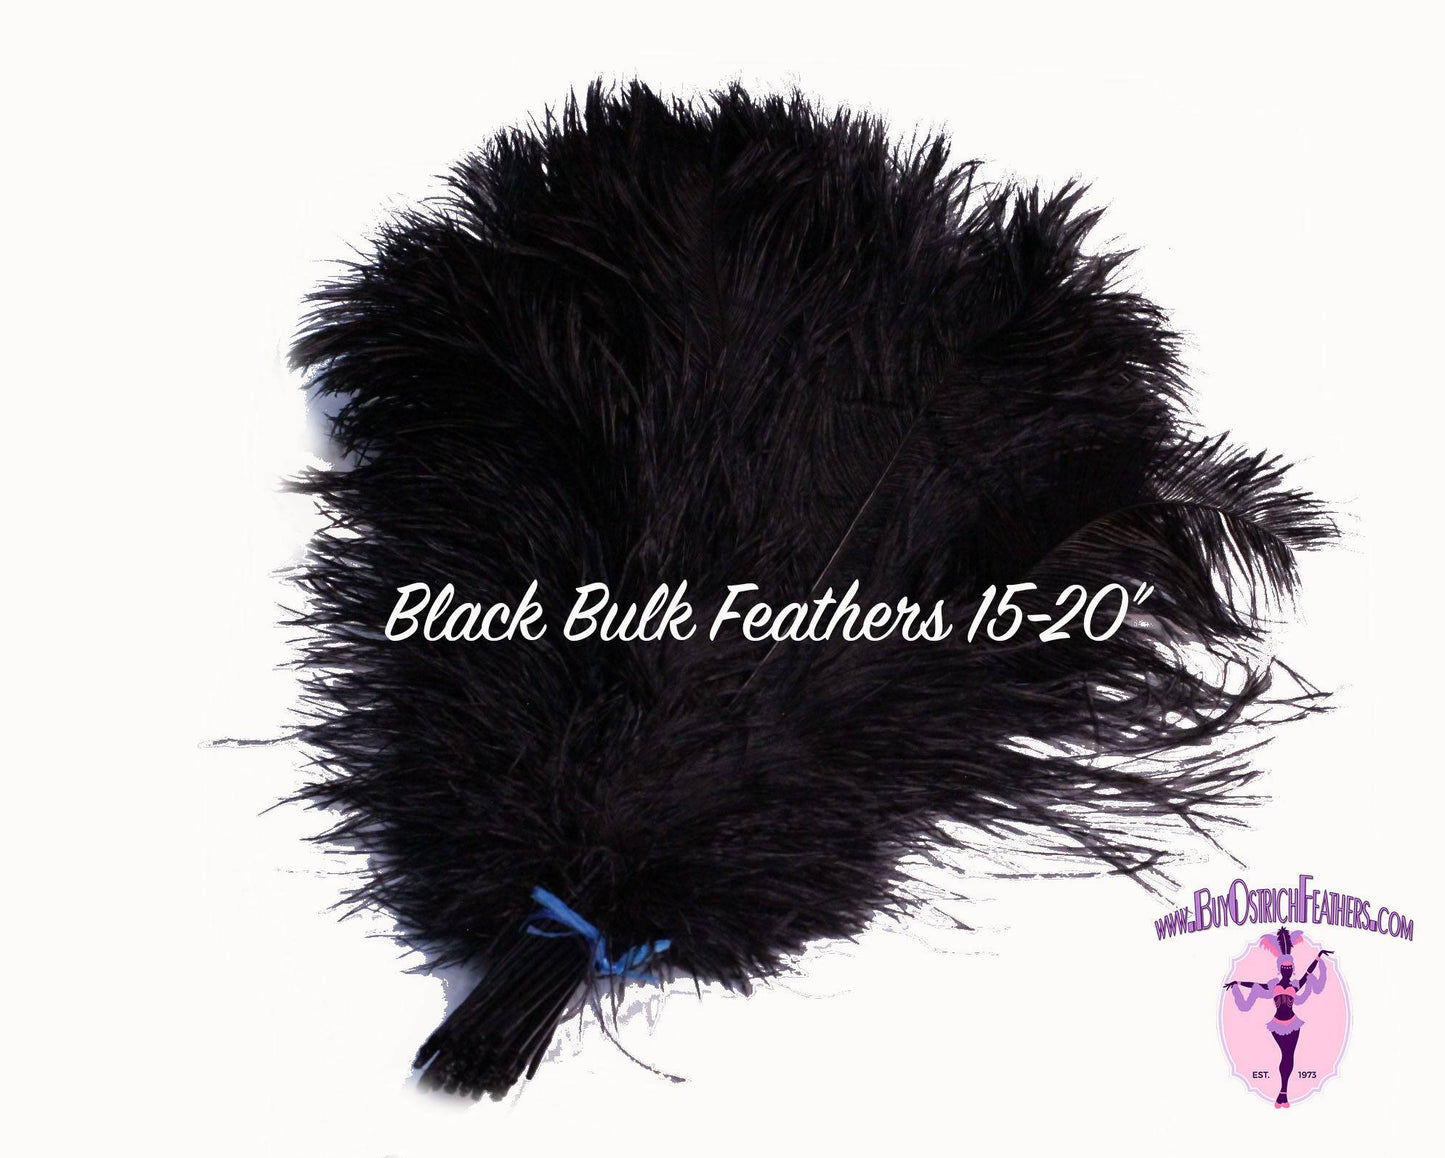 1/2 lb. - 25-29 Black Large Ostrich Wing Plumes Wholesale Feathers (Bulk)